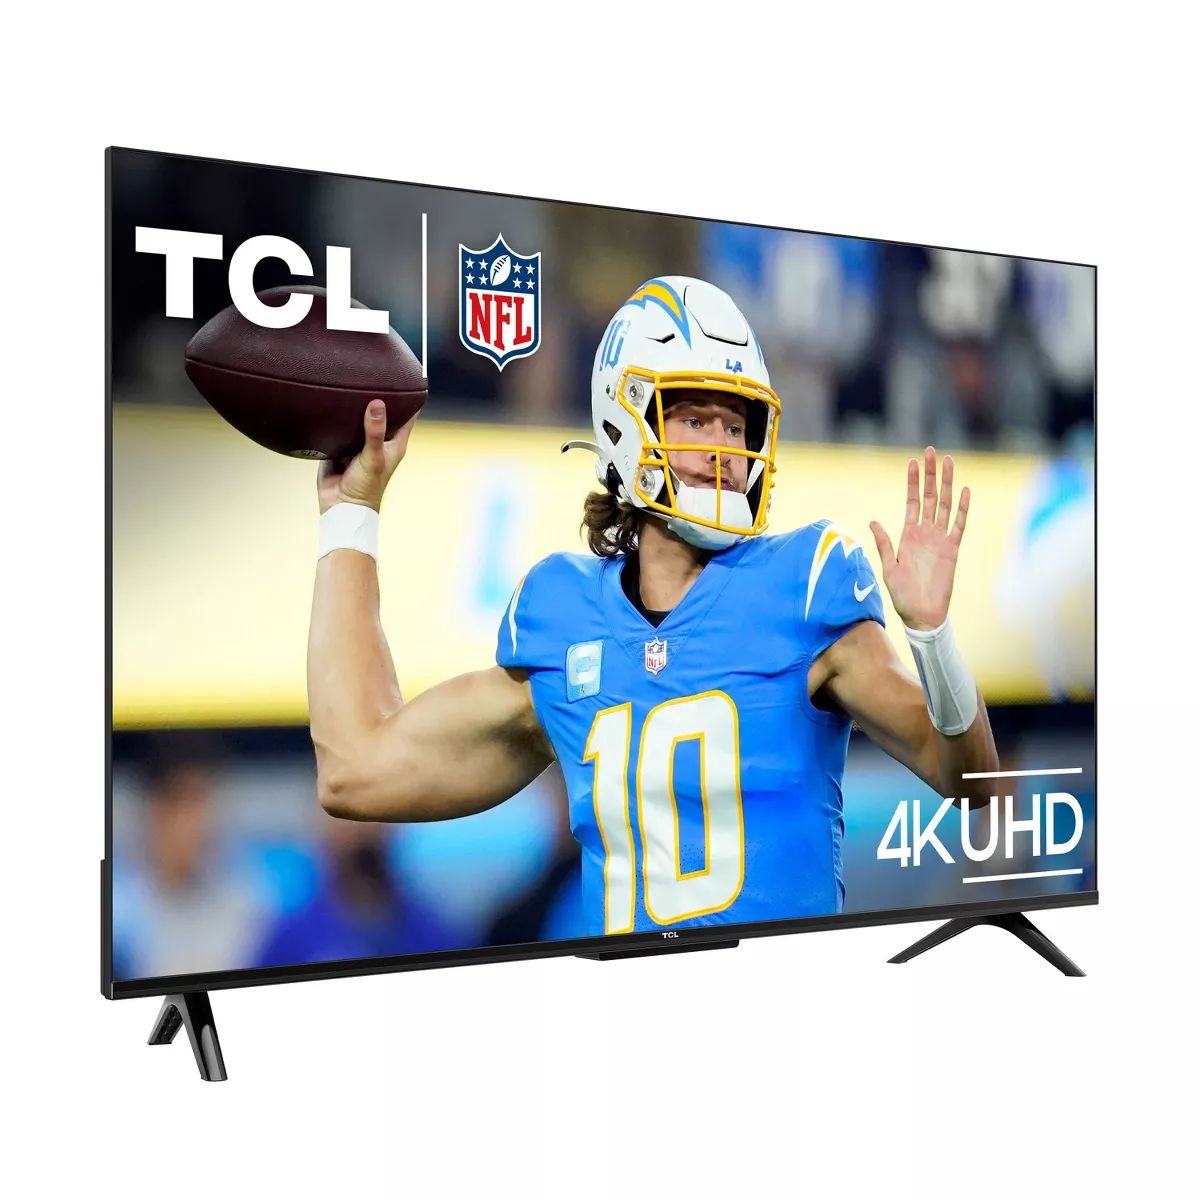 TCL 43" Class S4 S-Class 4K UHD HDR LED Smart TV with Google TV - 43S450G | Target